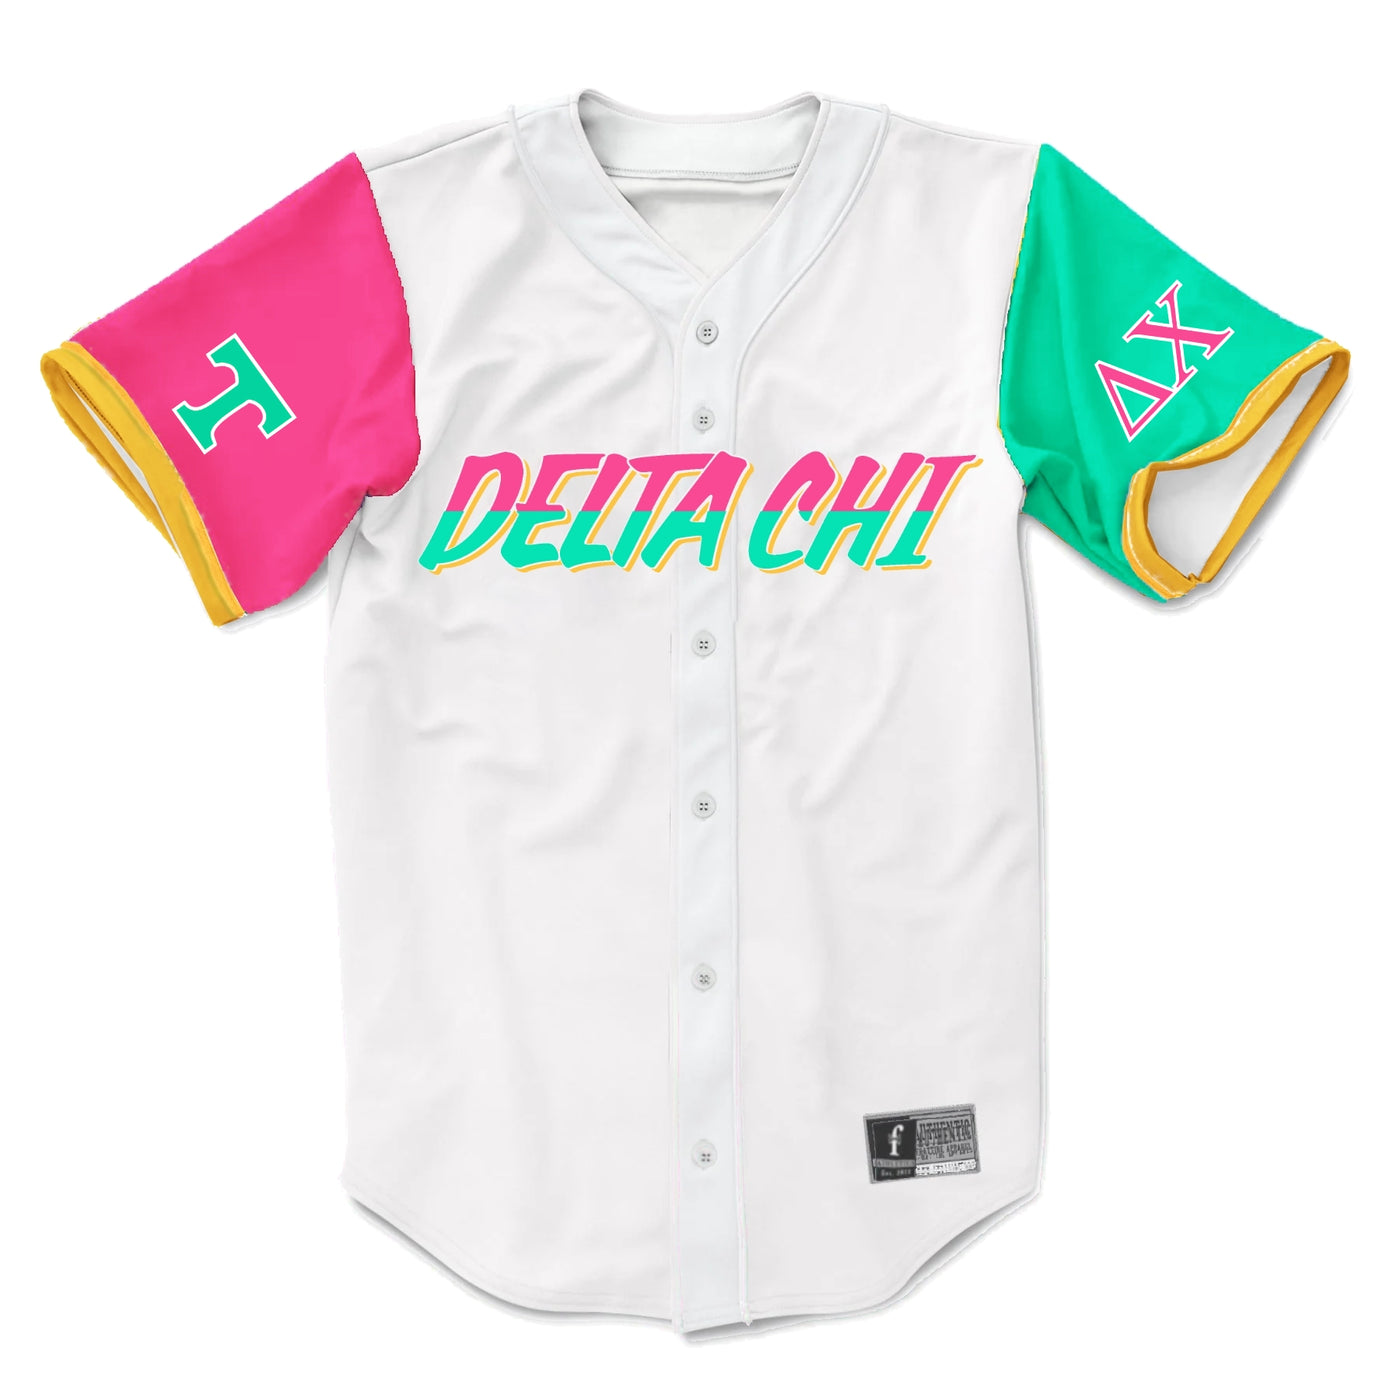 Delta Chi Pastel Baseball Jersey